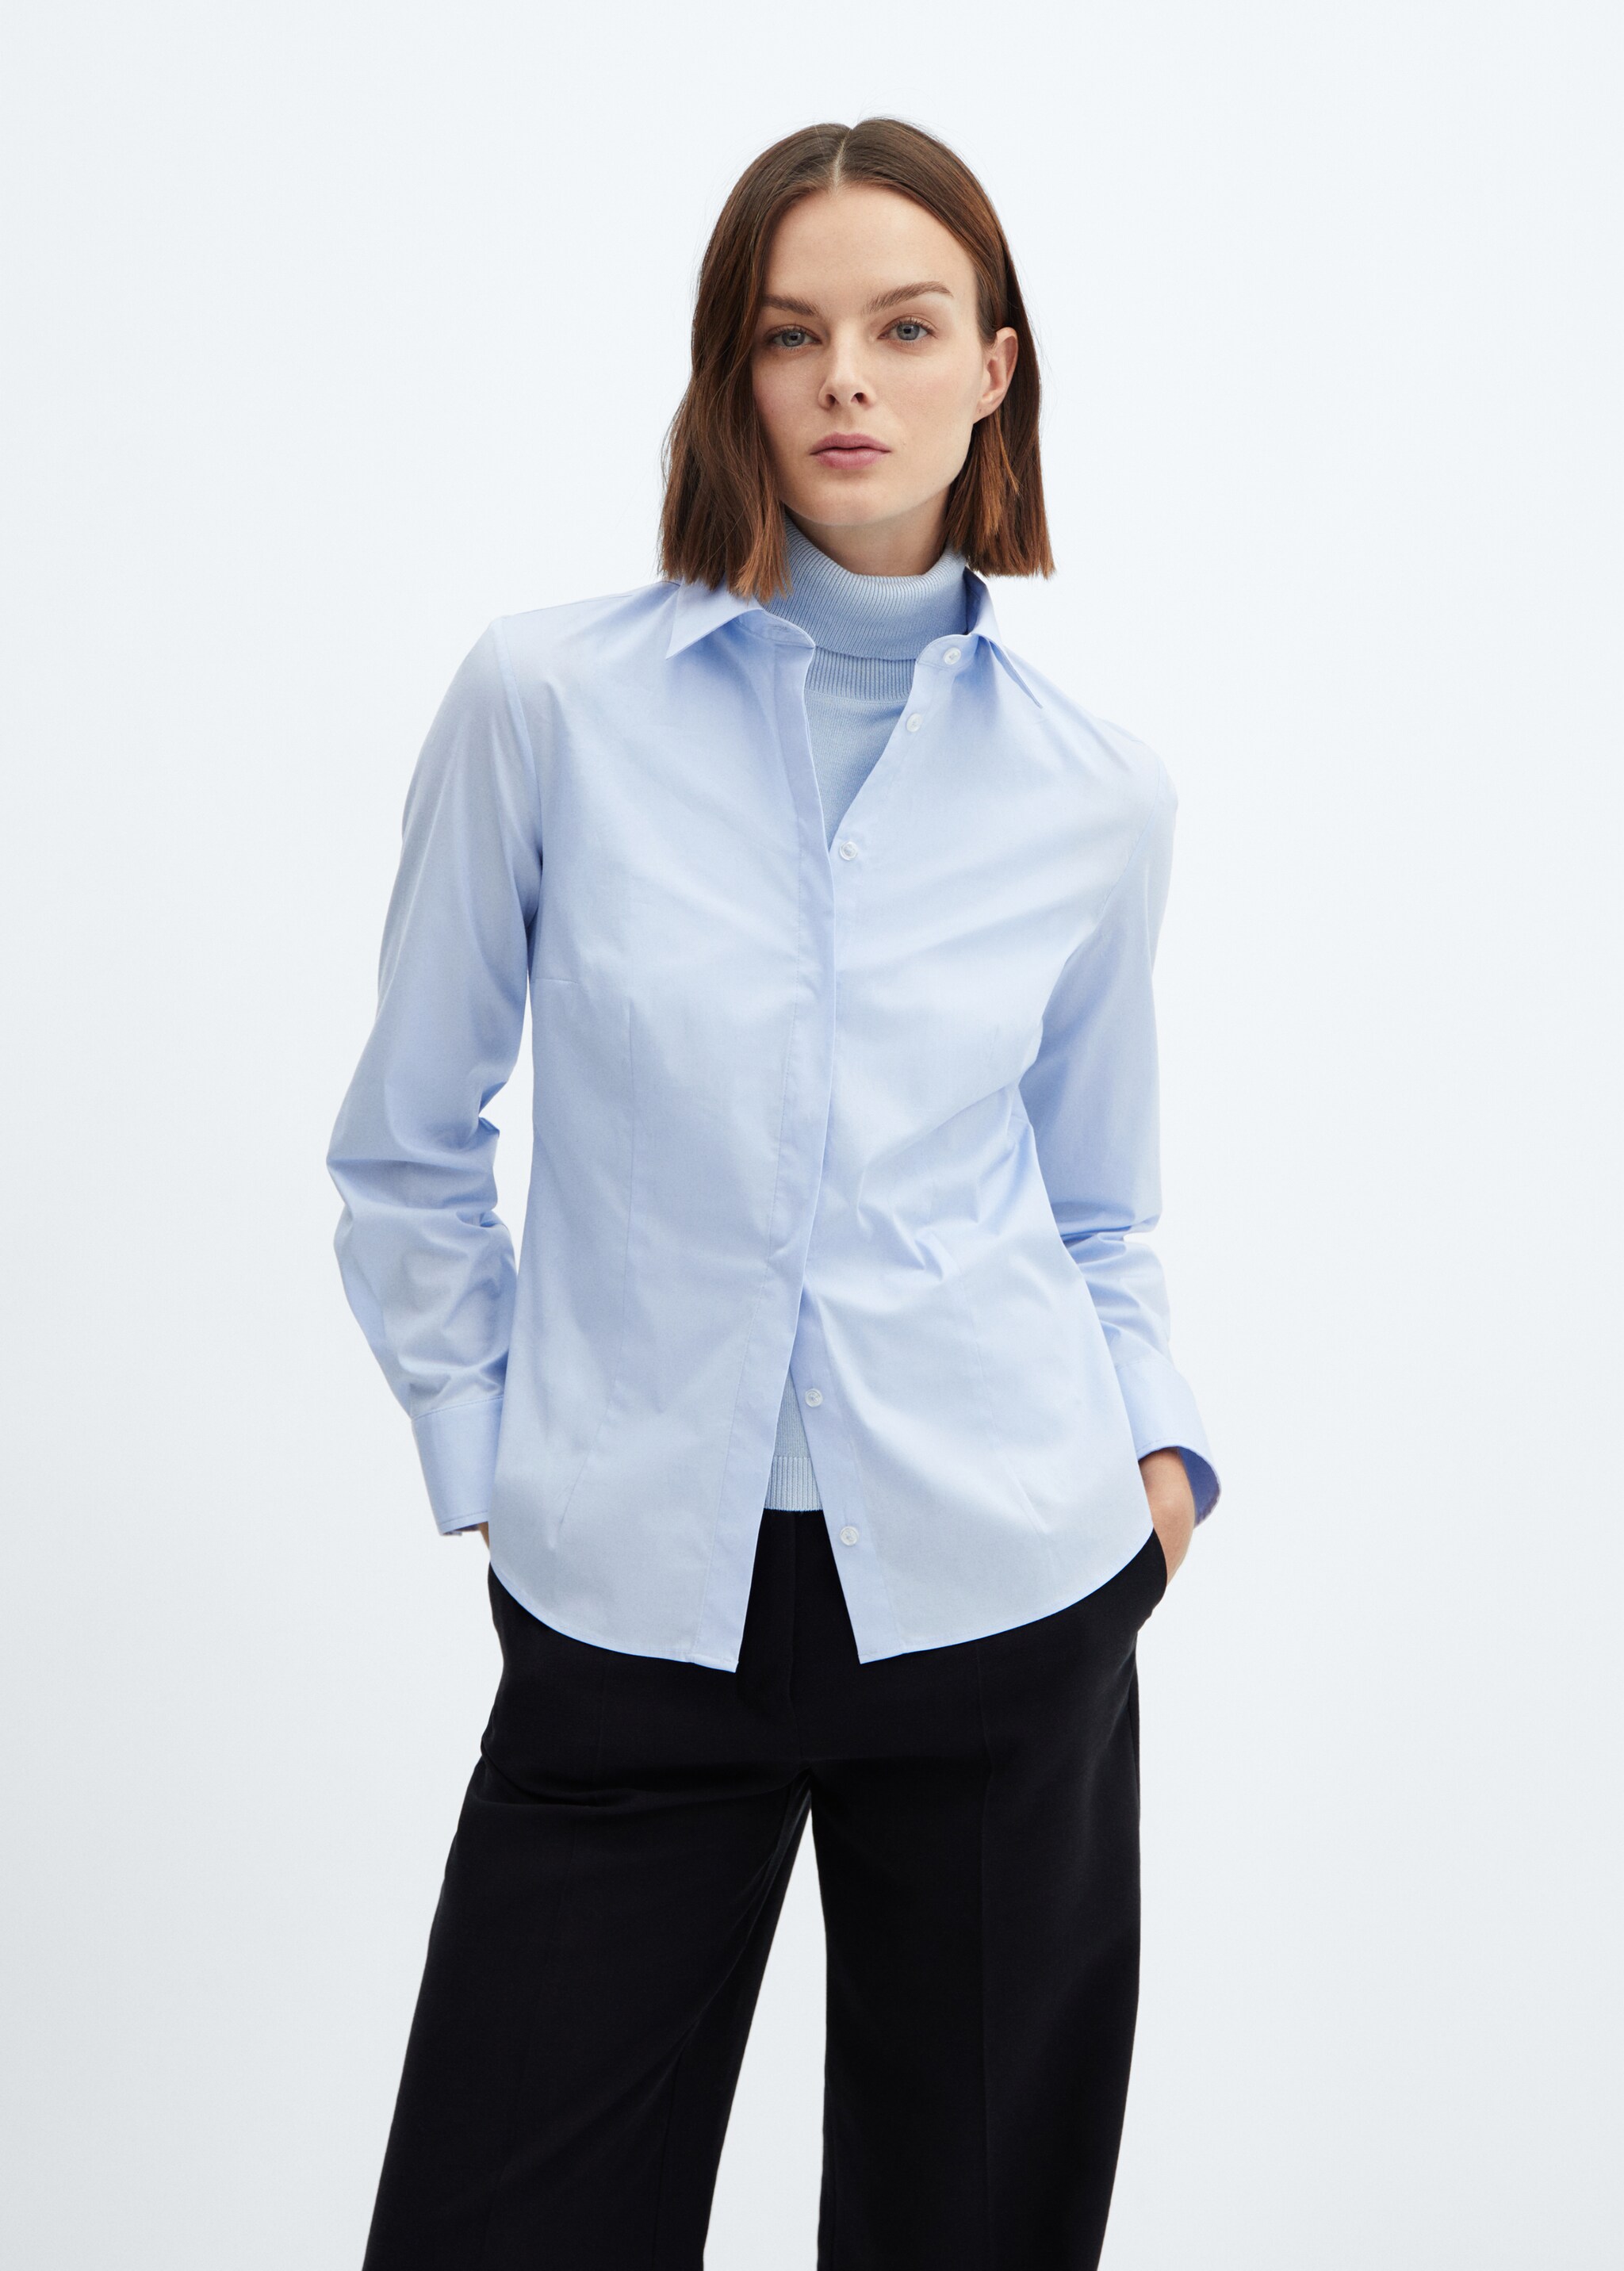 Fitted cotton shirt - Medium plane